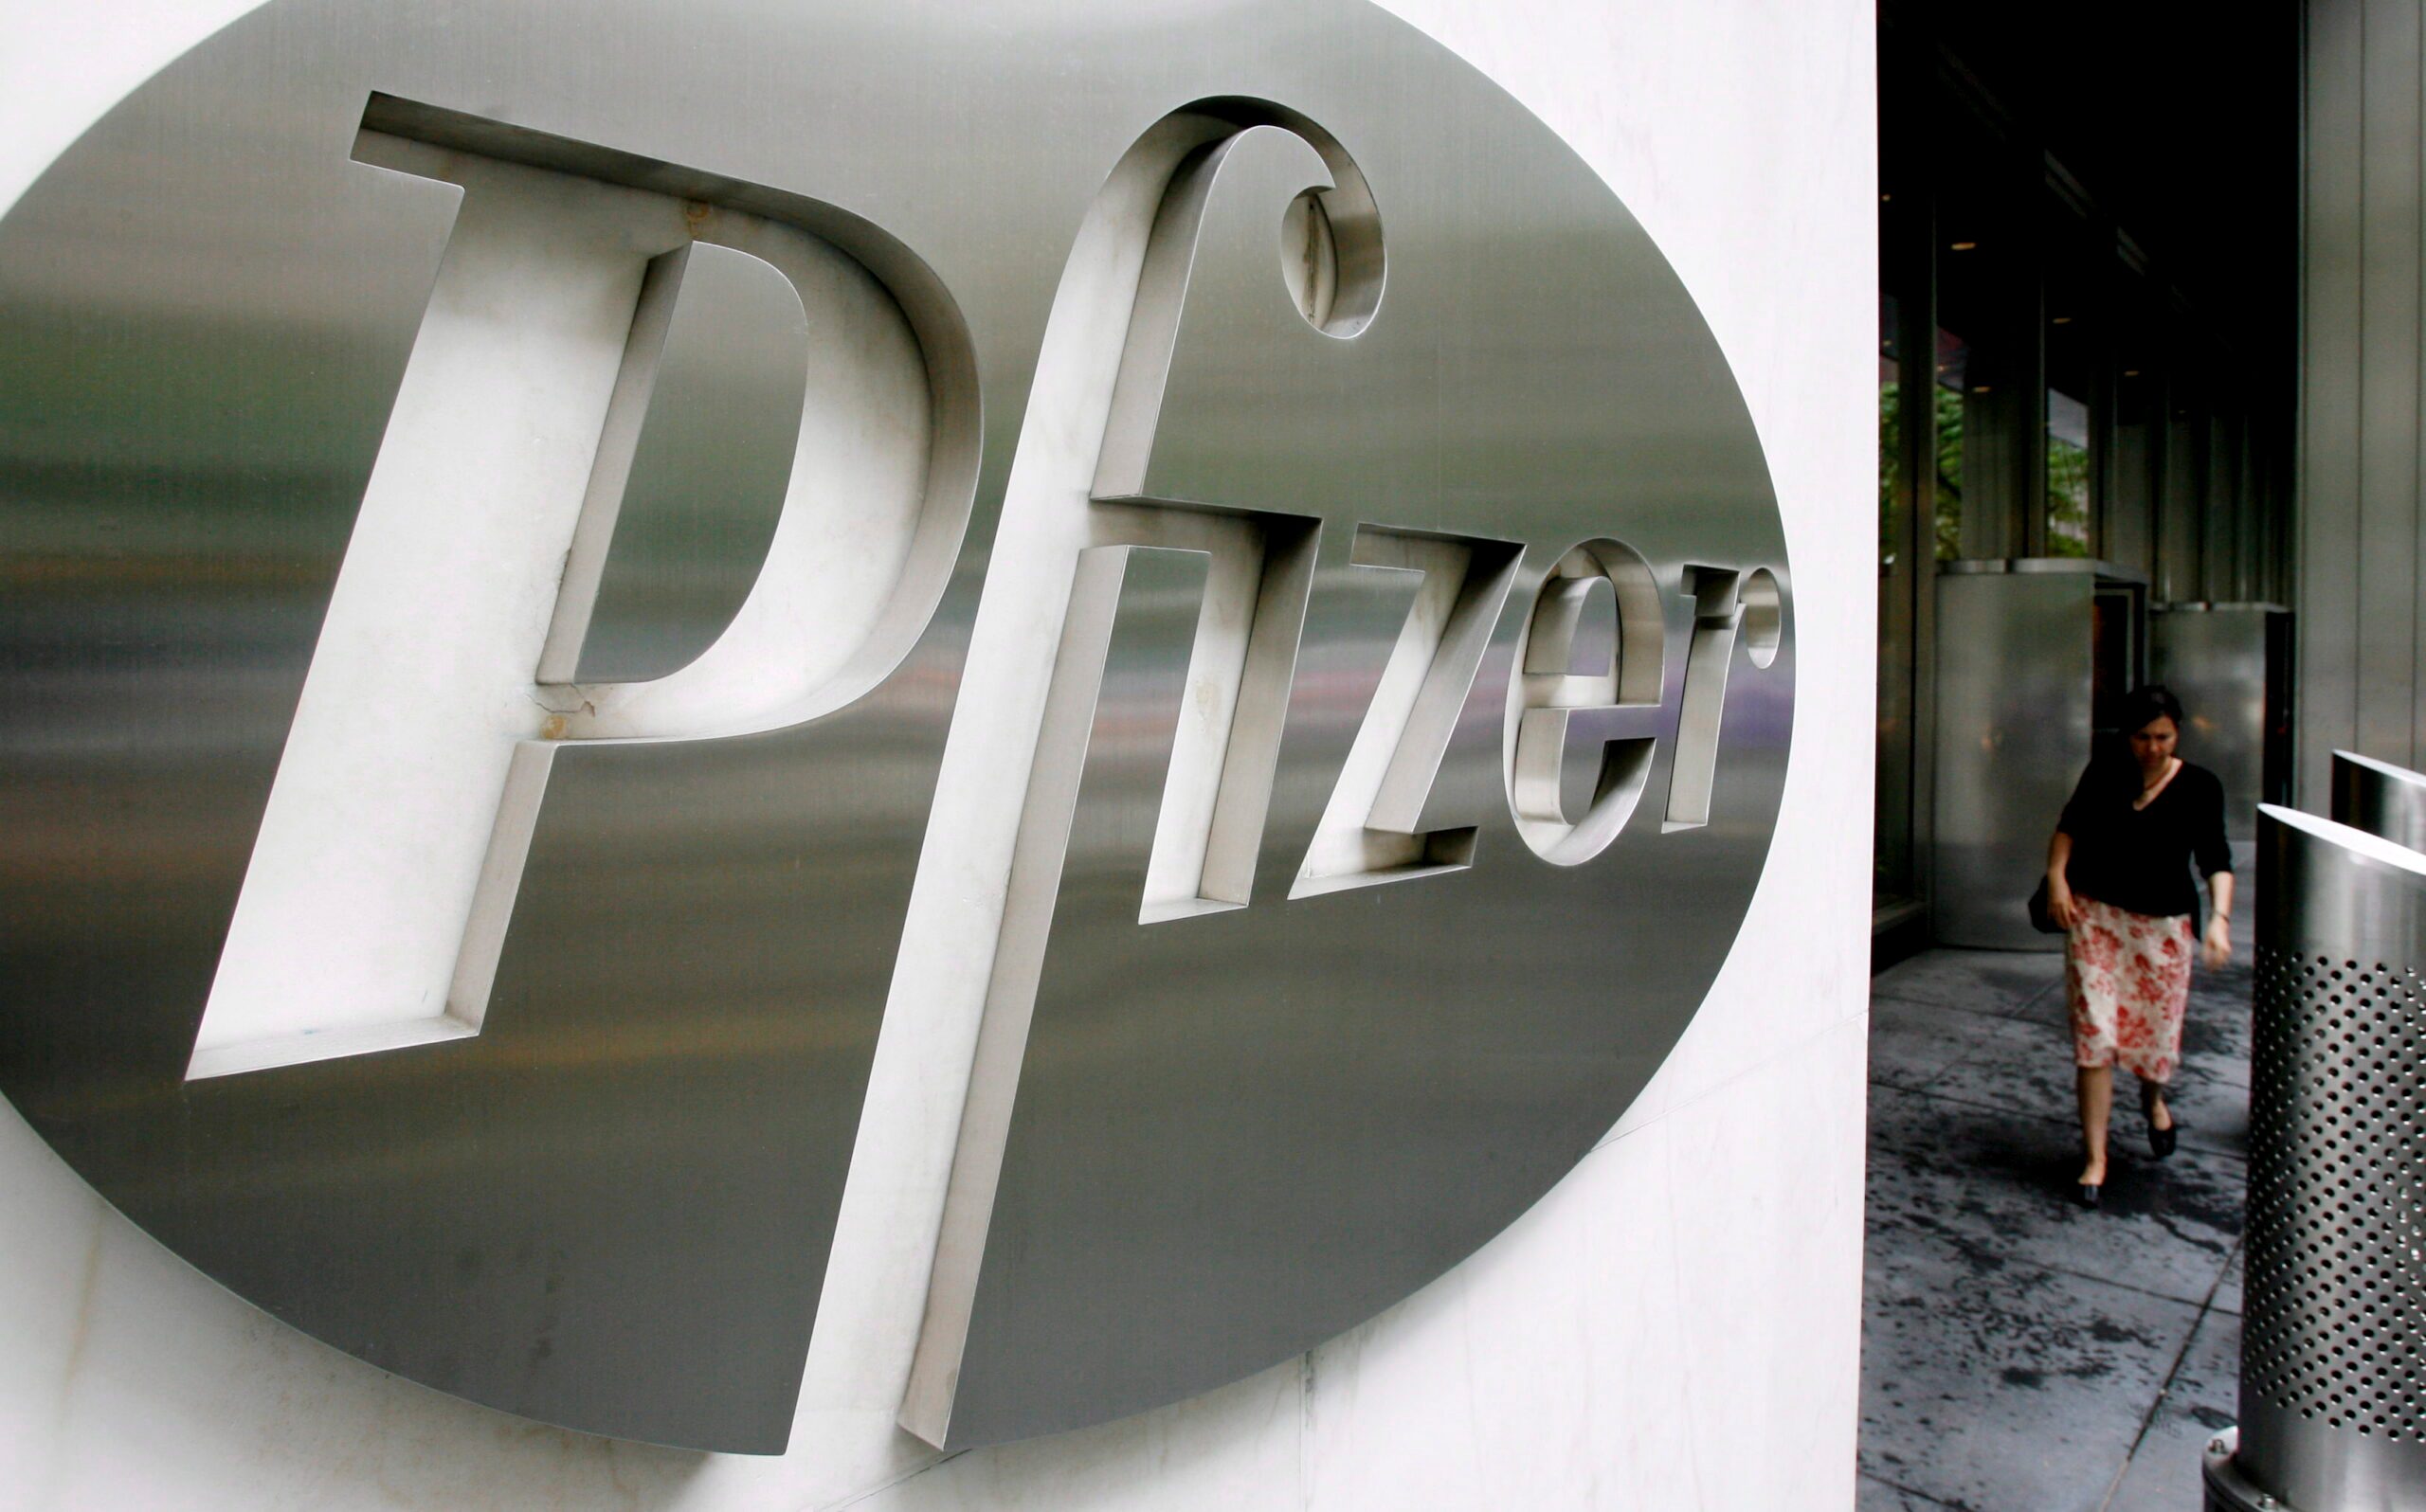 Pfizer acquires Array BioPharma, valued at $11.4 billion